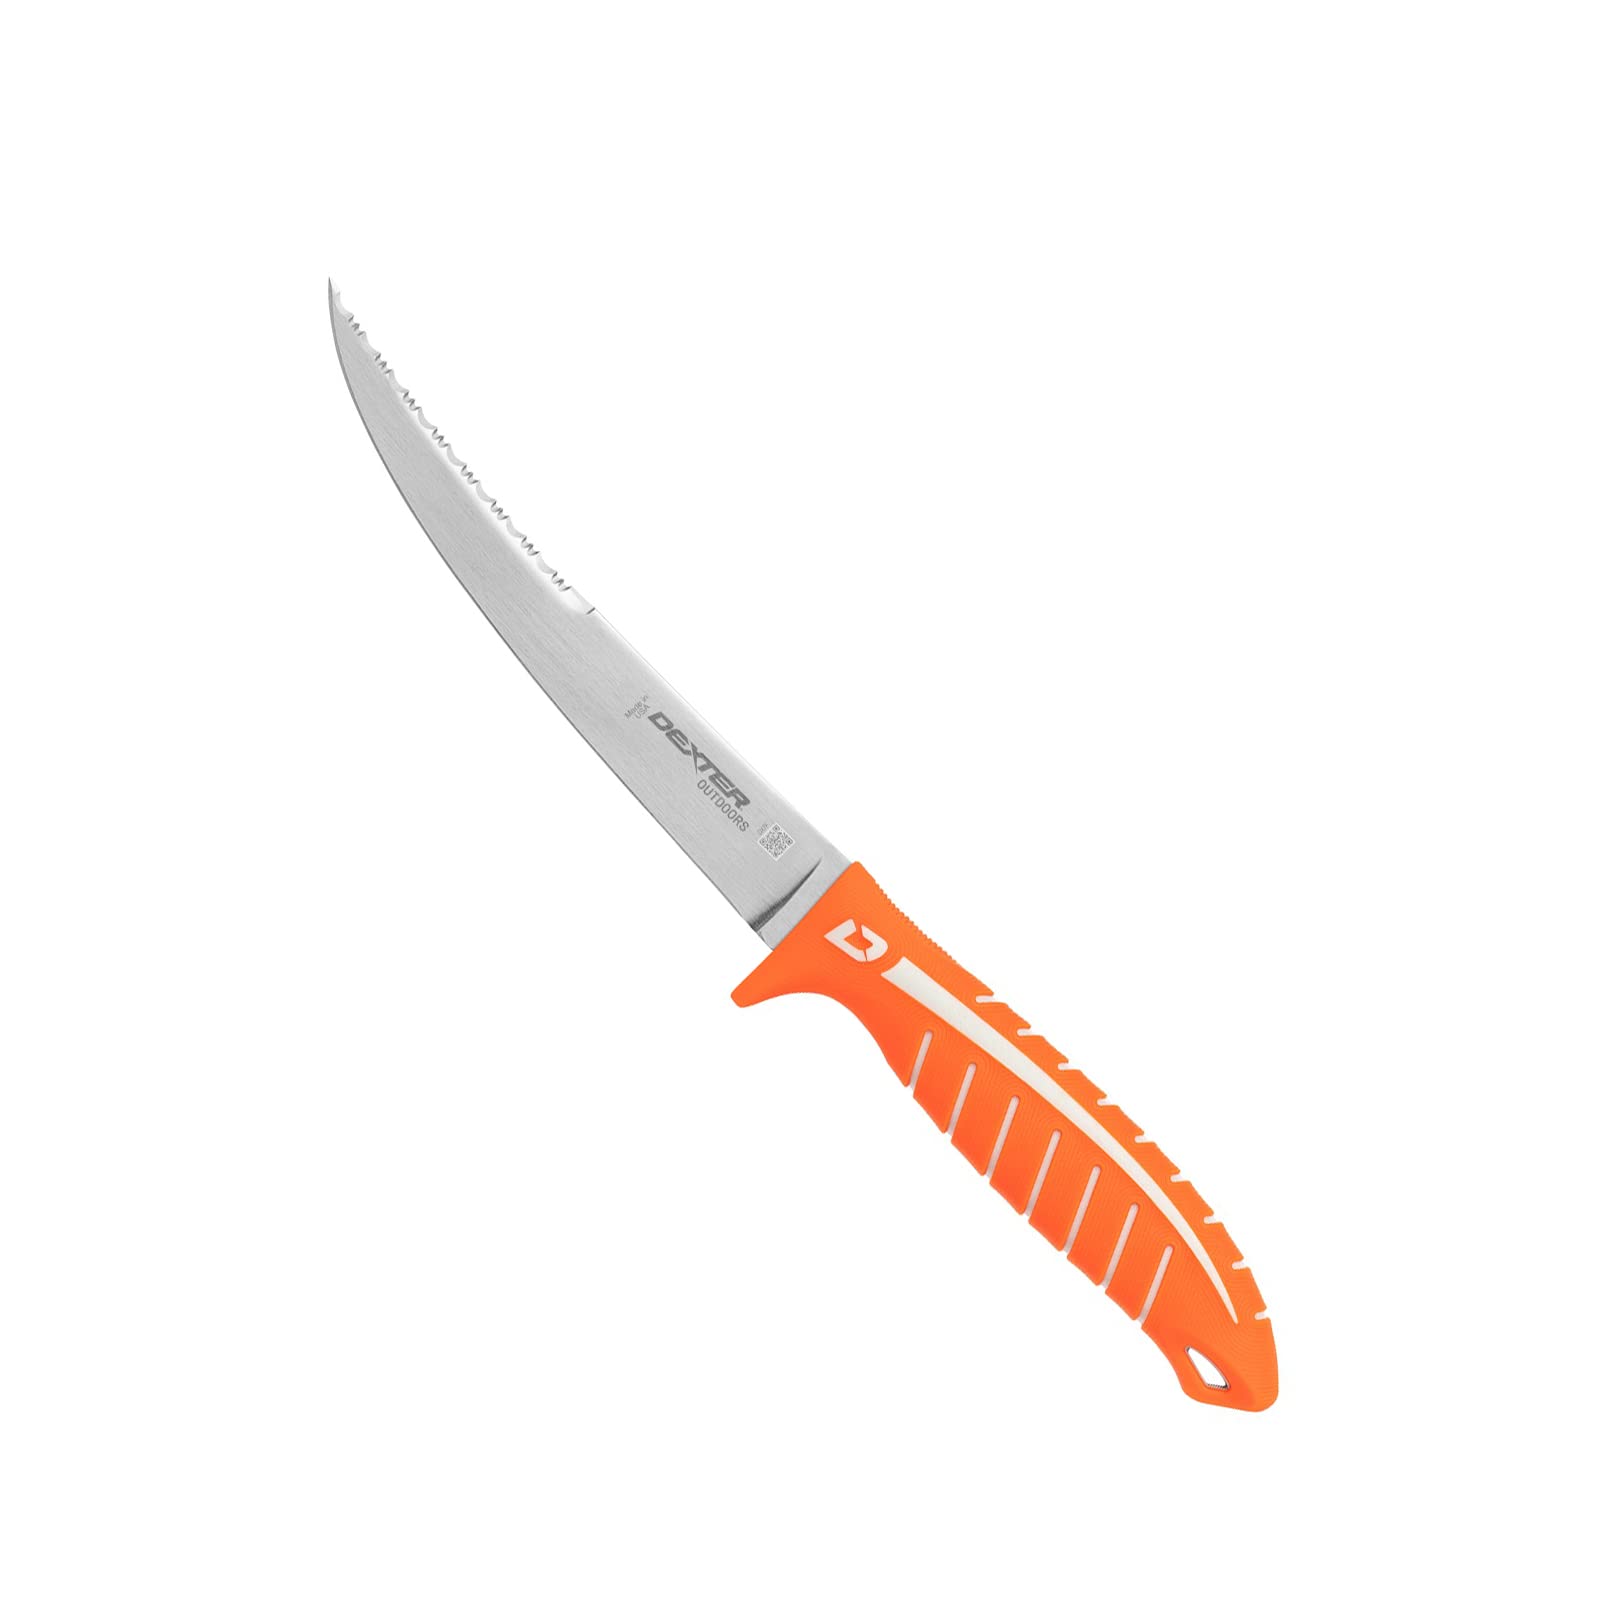 DEXTREME® Dual Edge 7 flexible fillet knife with sheath – Richard's  Kitchen Store